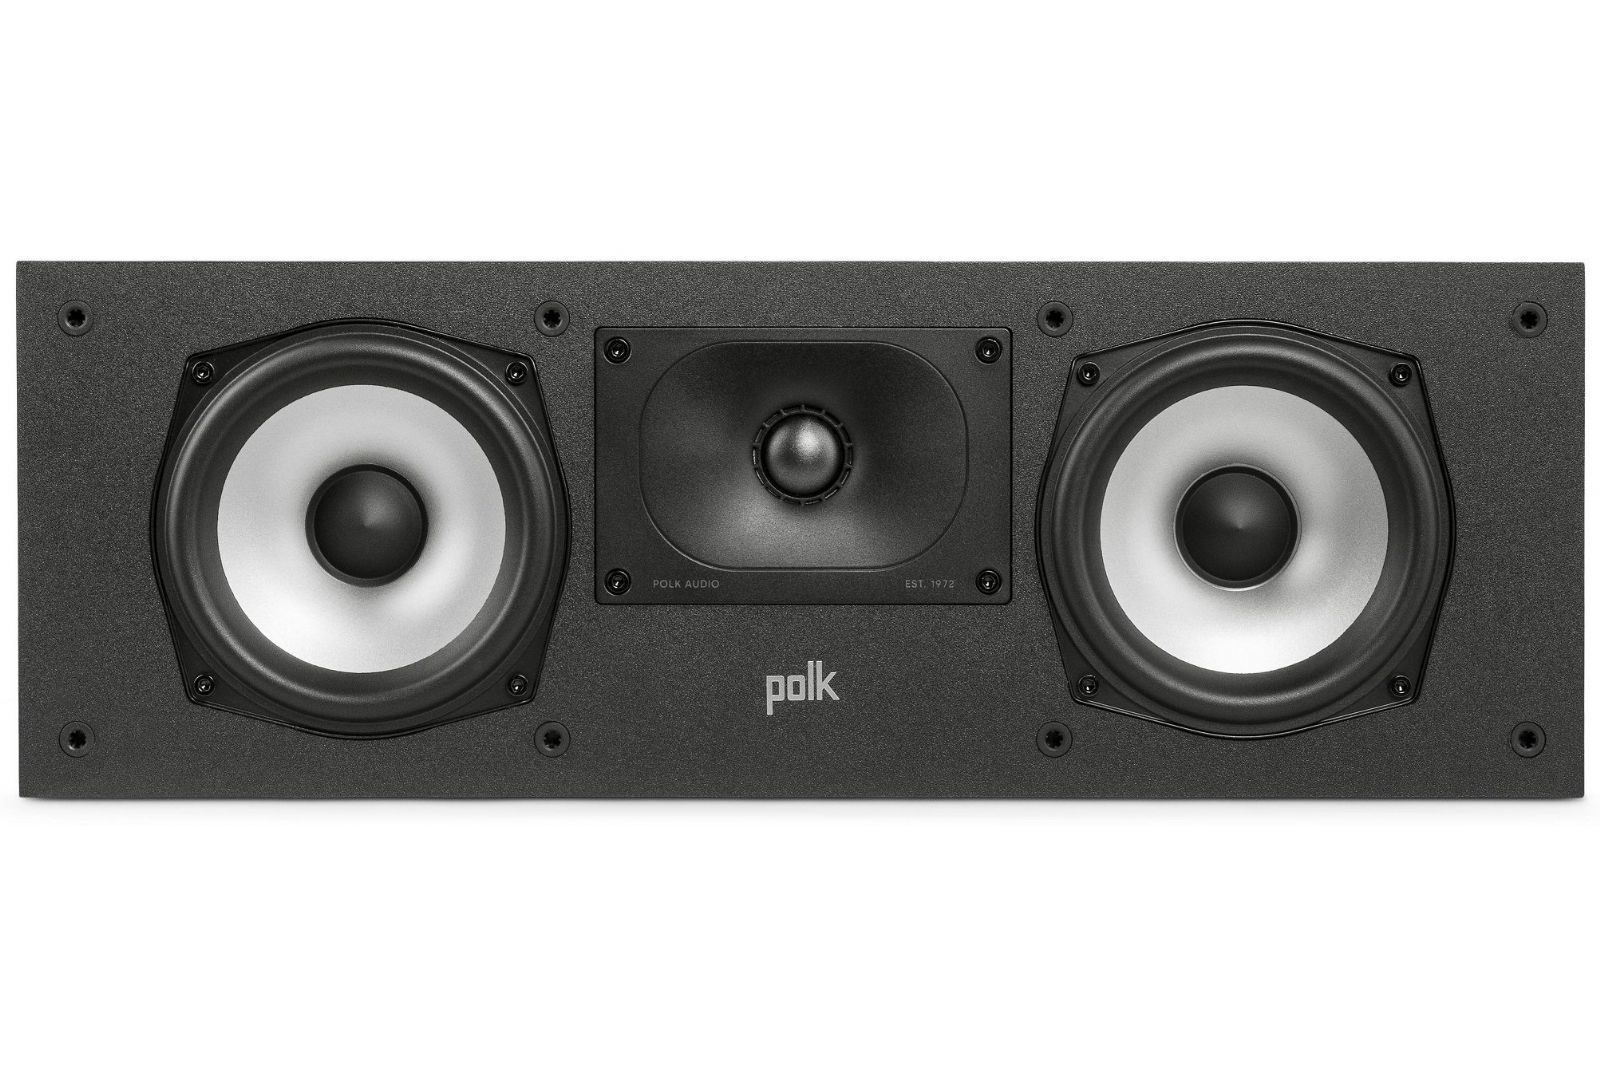 Högtalare Polk Audio Monitor XT30 centerhögtalare